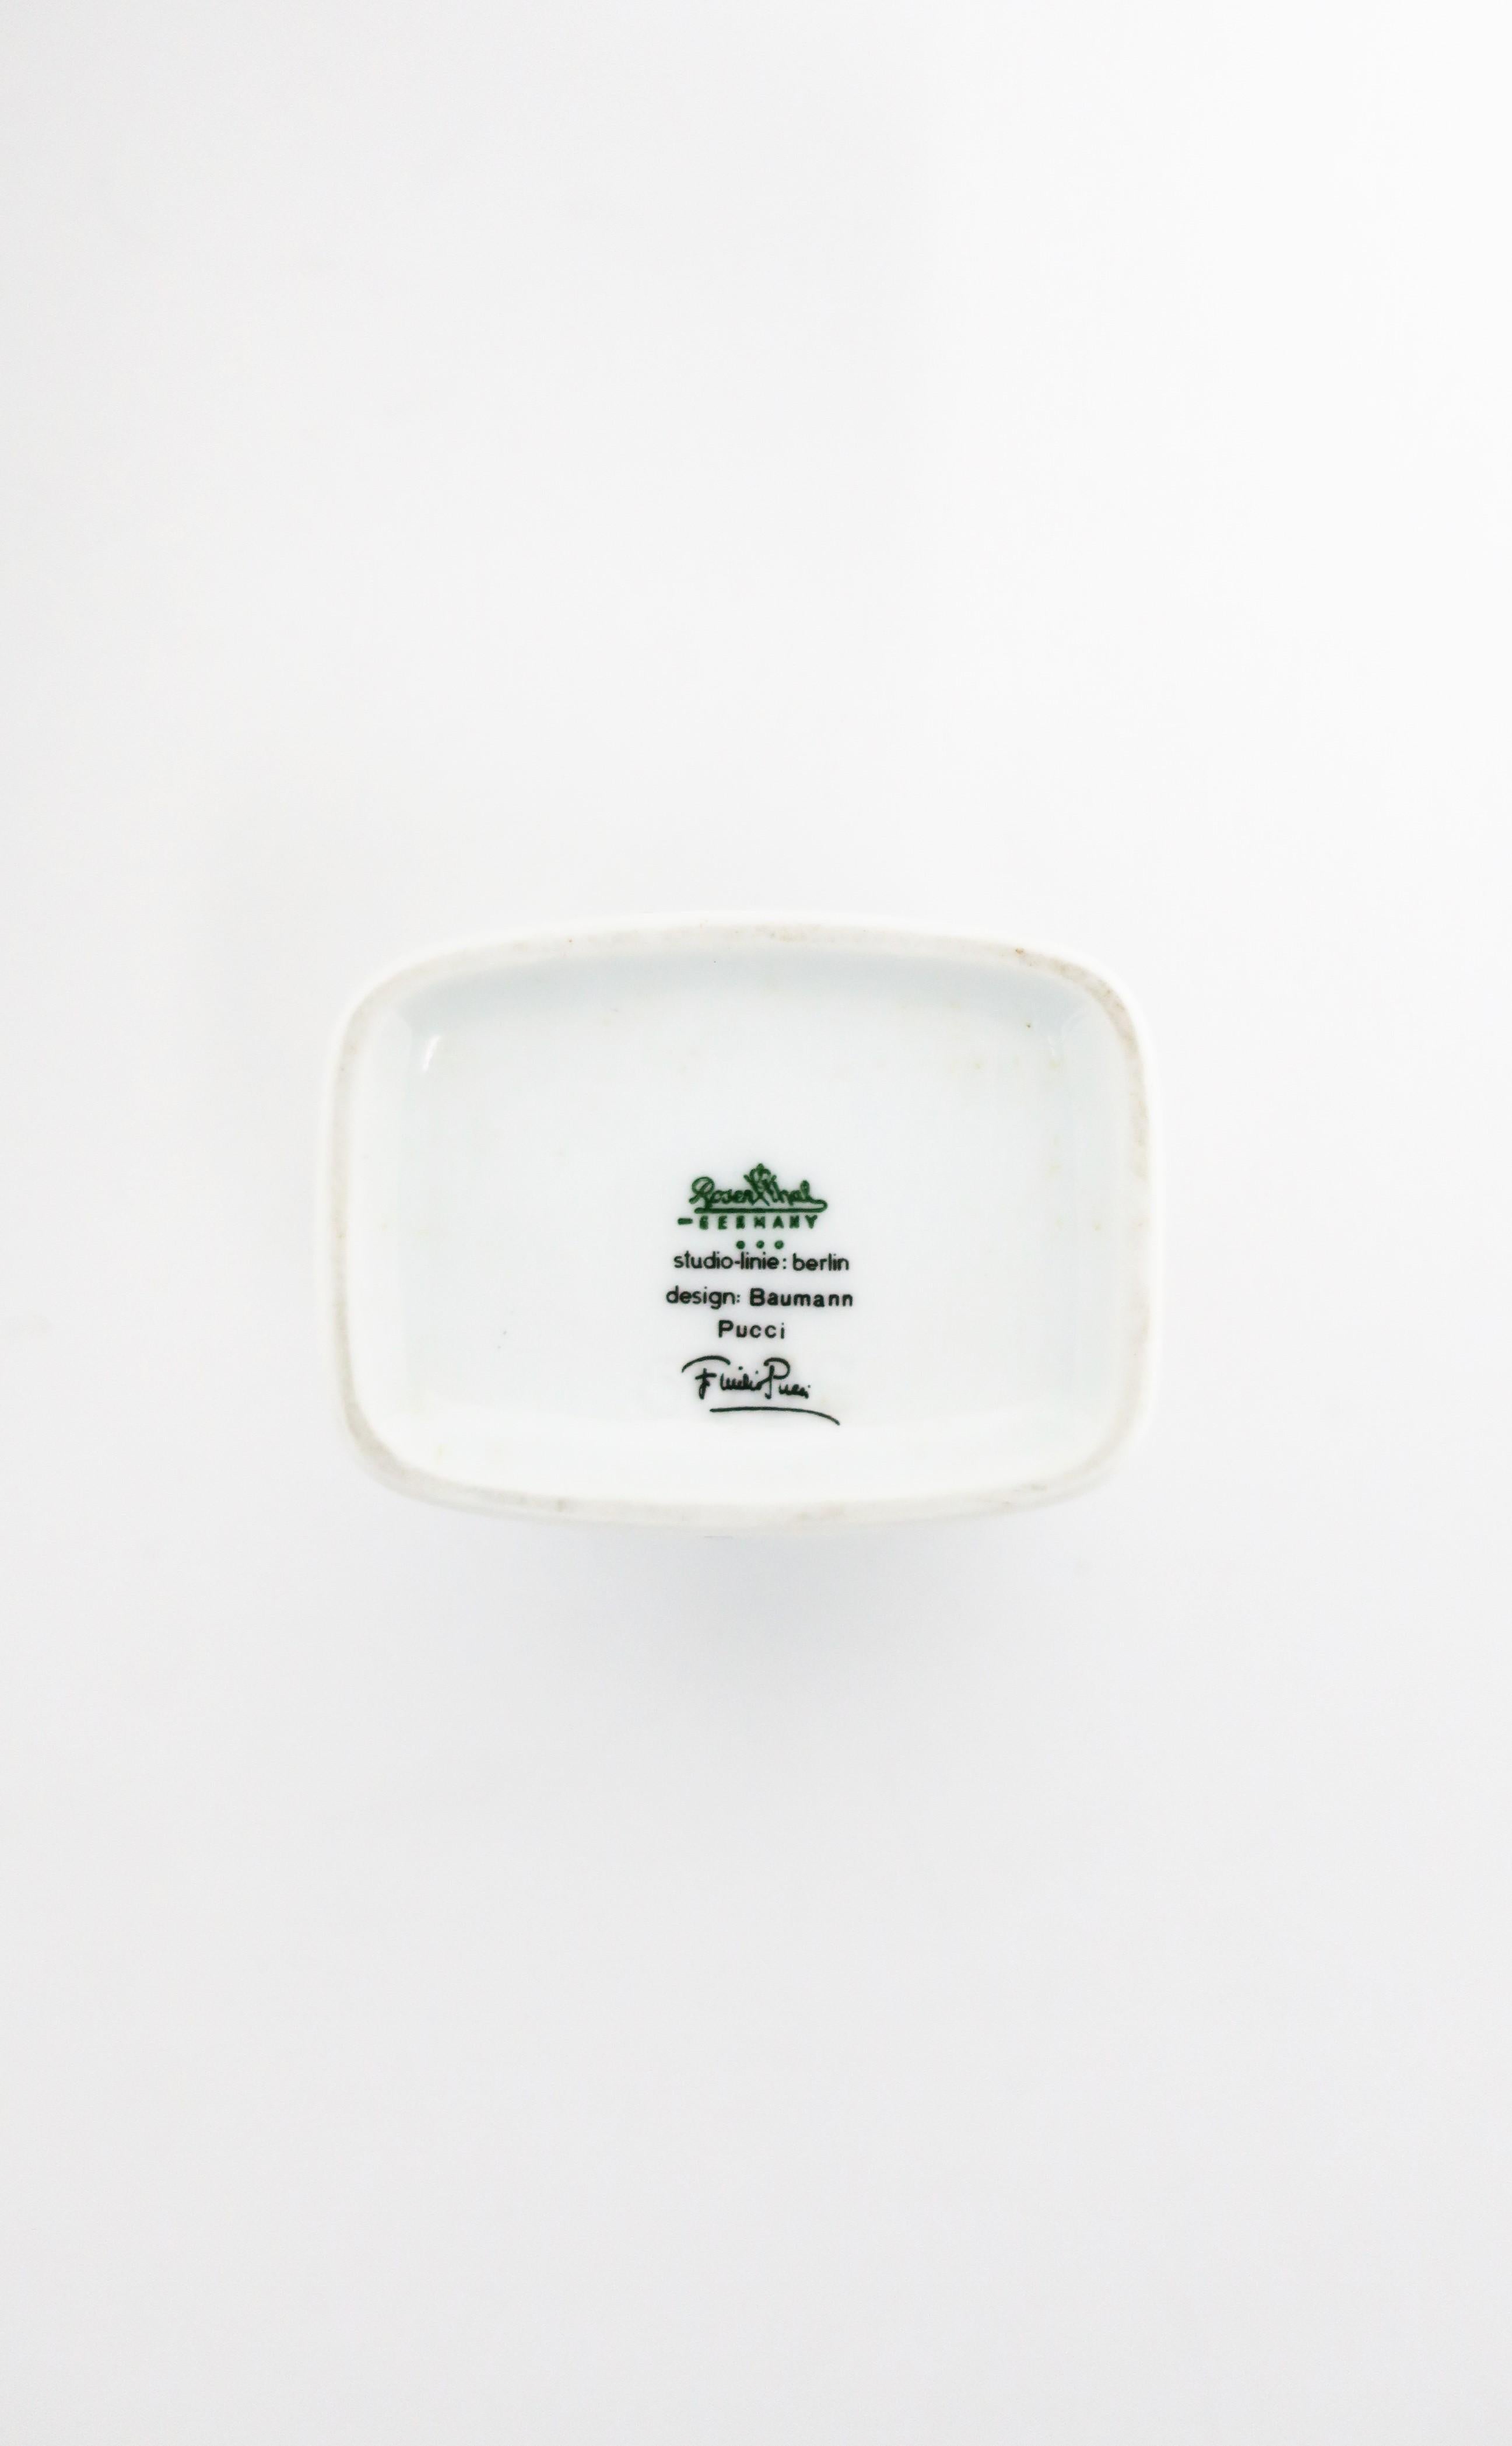 Emilio Pucci & Hans Theo Baumann Porcelain Cig Vessel for Rosenthal Studio-Line For Sale 6